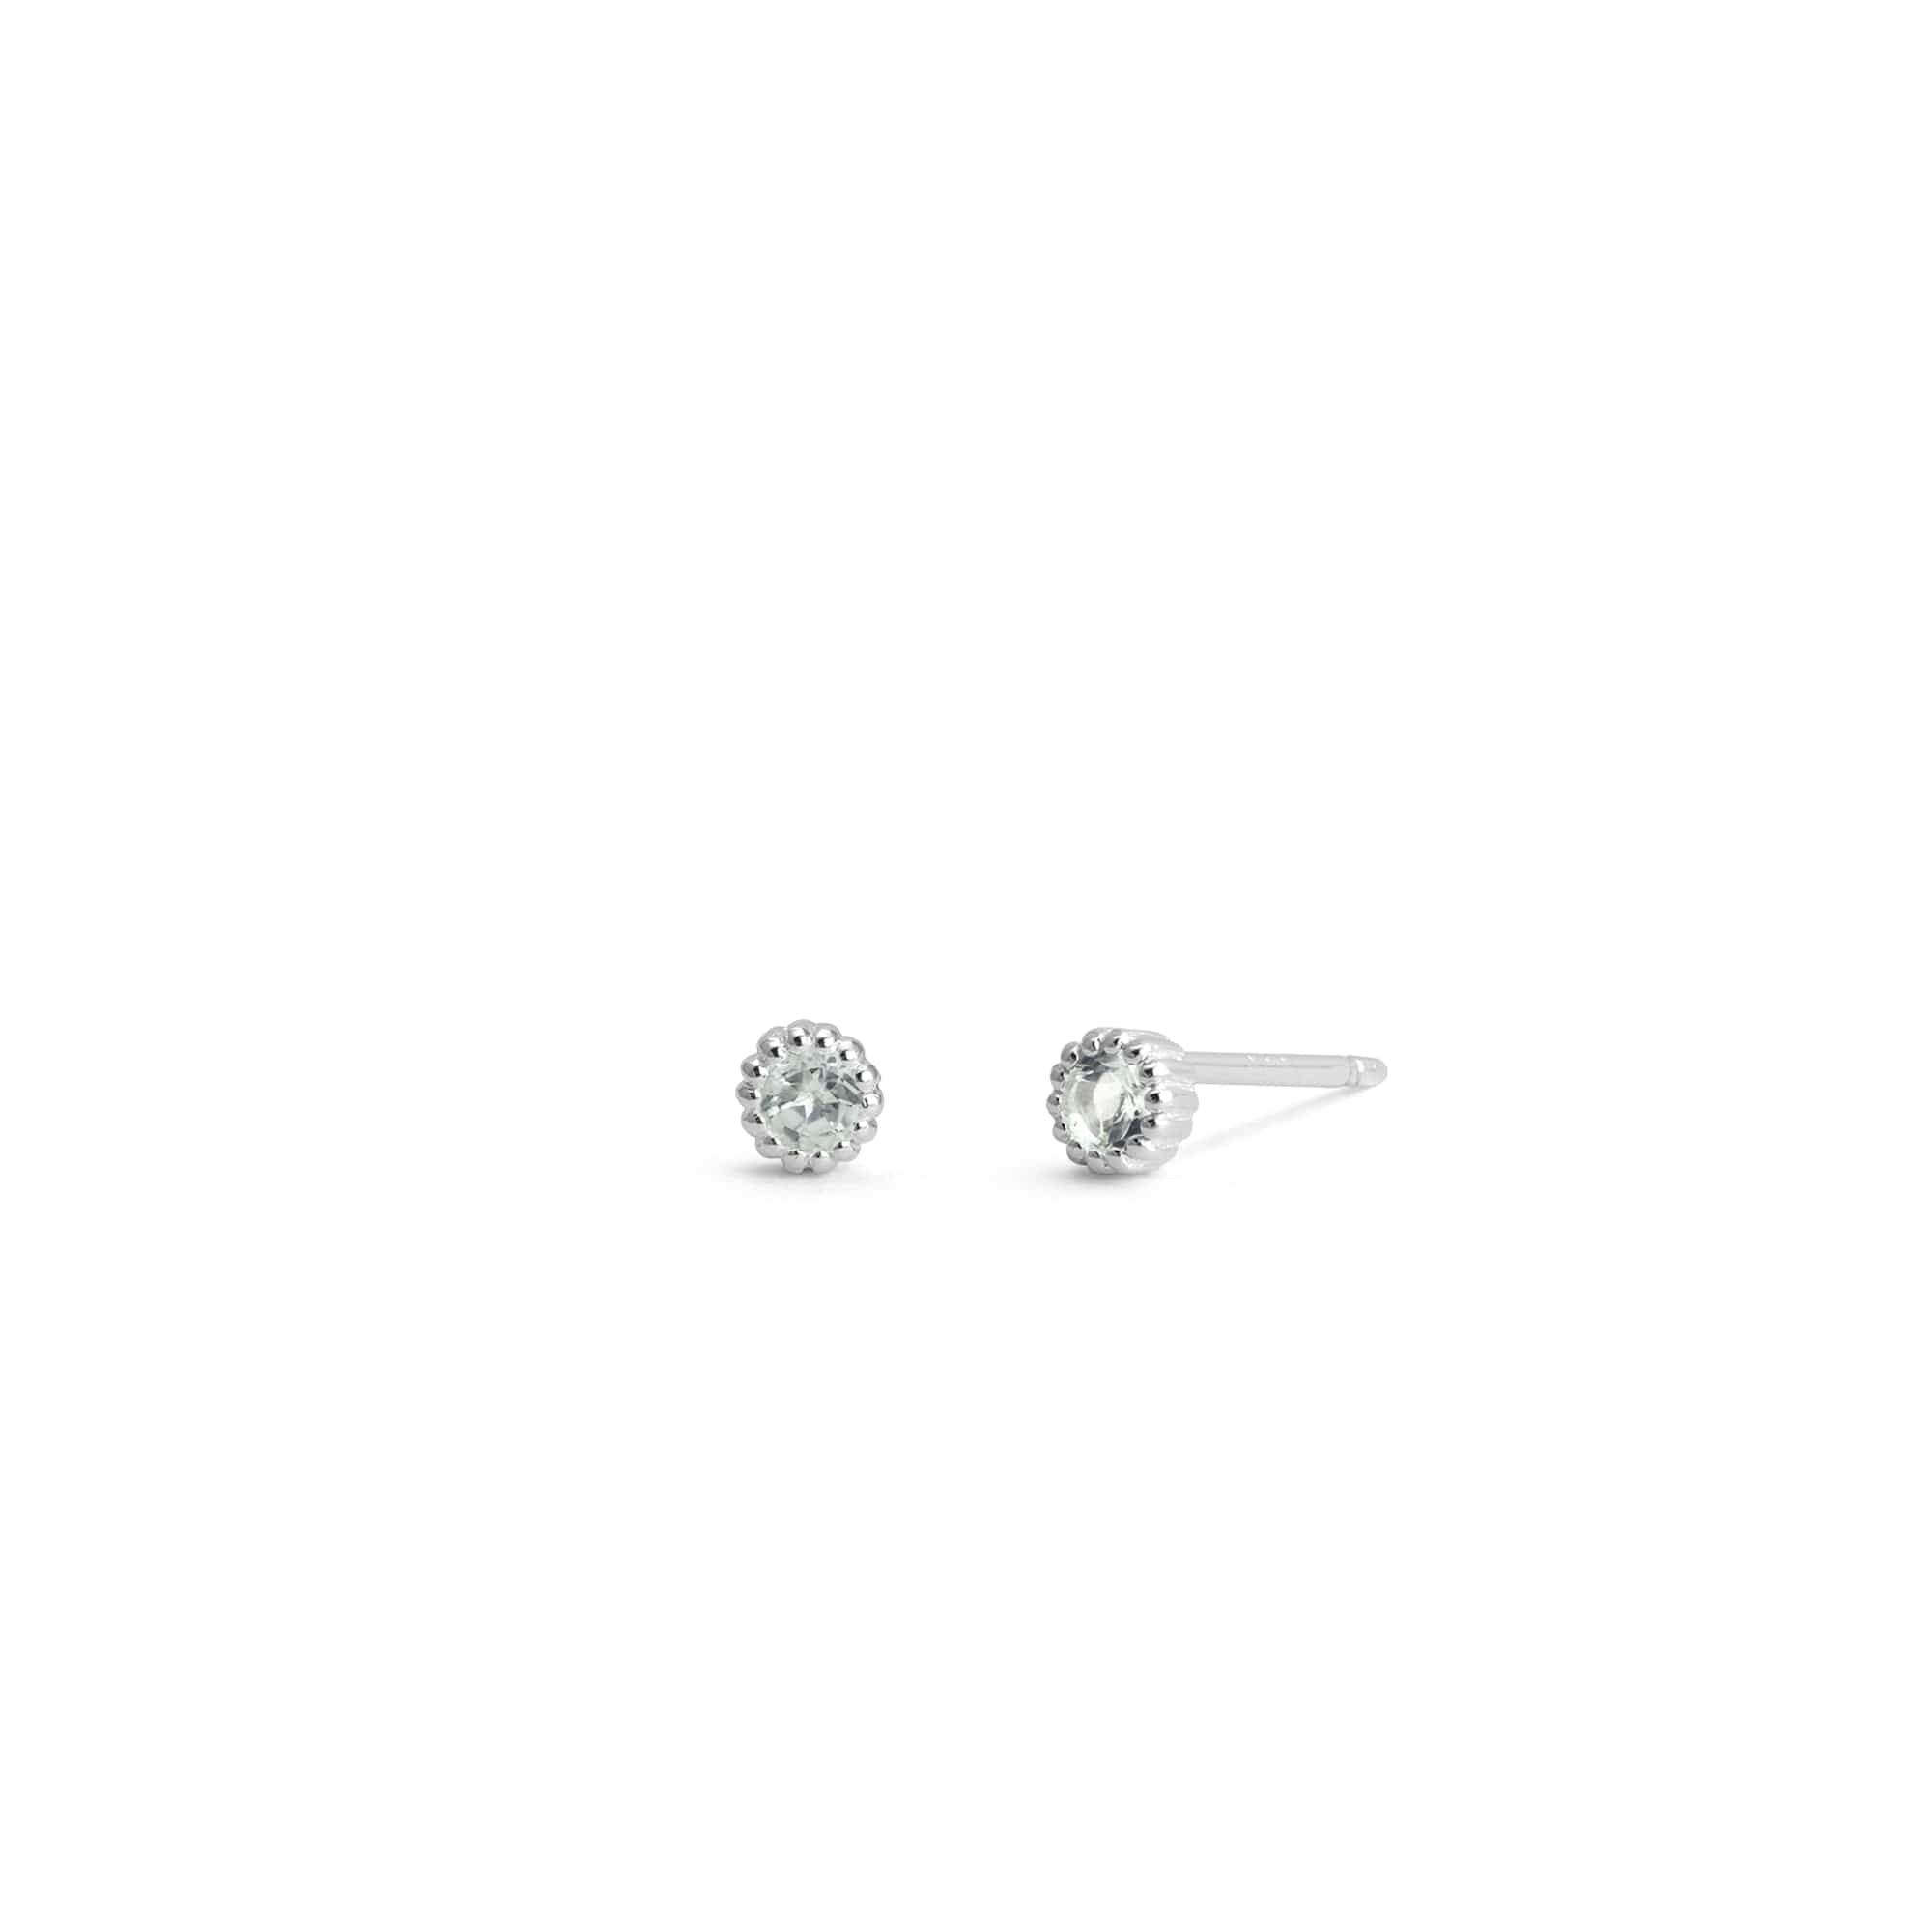 Boma Jewelry Earrings White Topaz Mini Colored Gemstone Studs